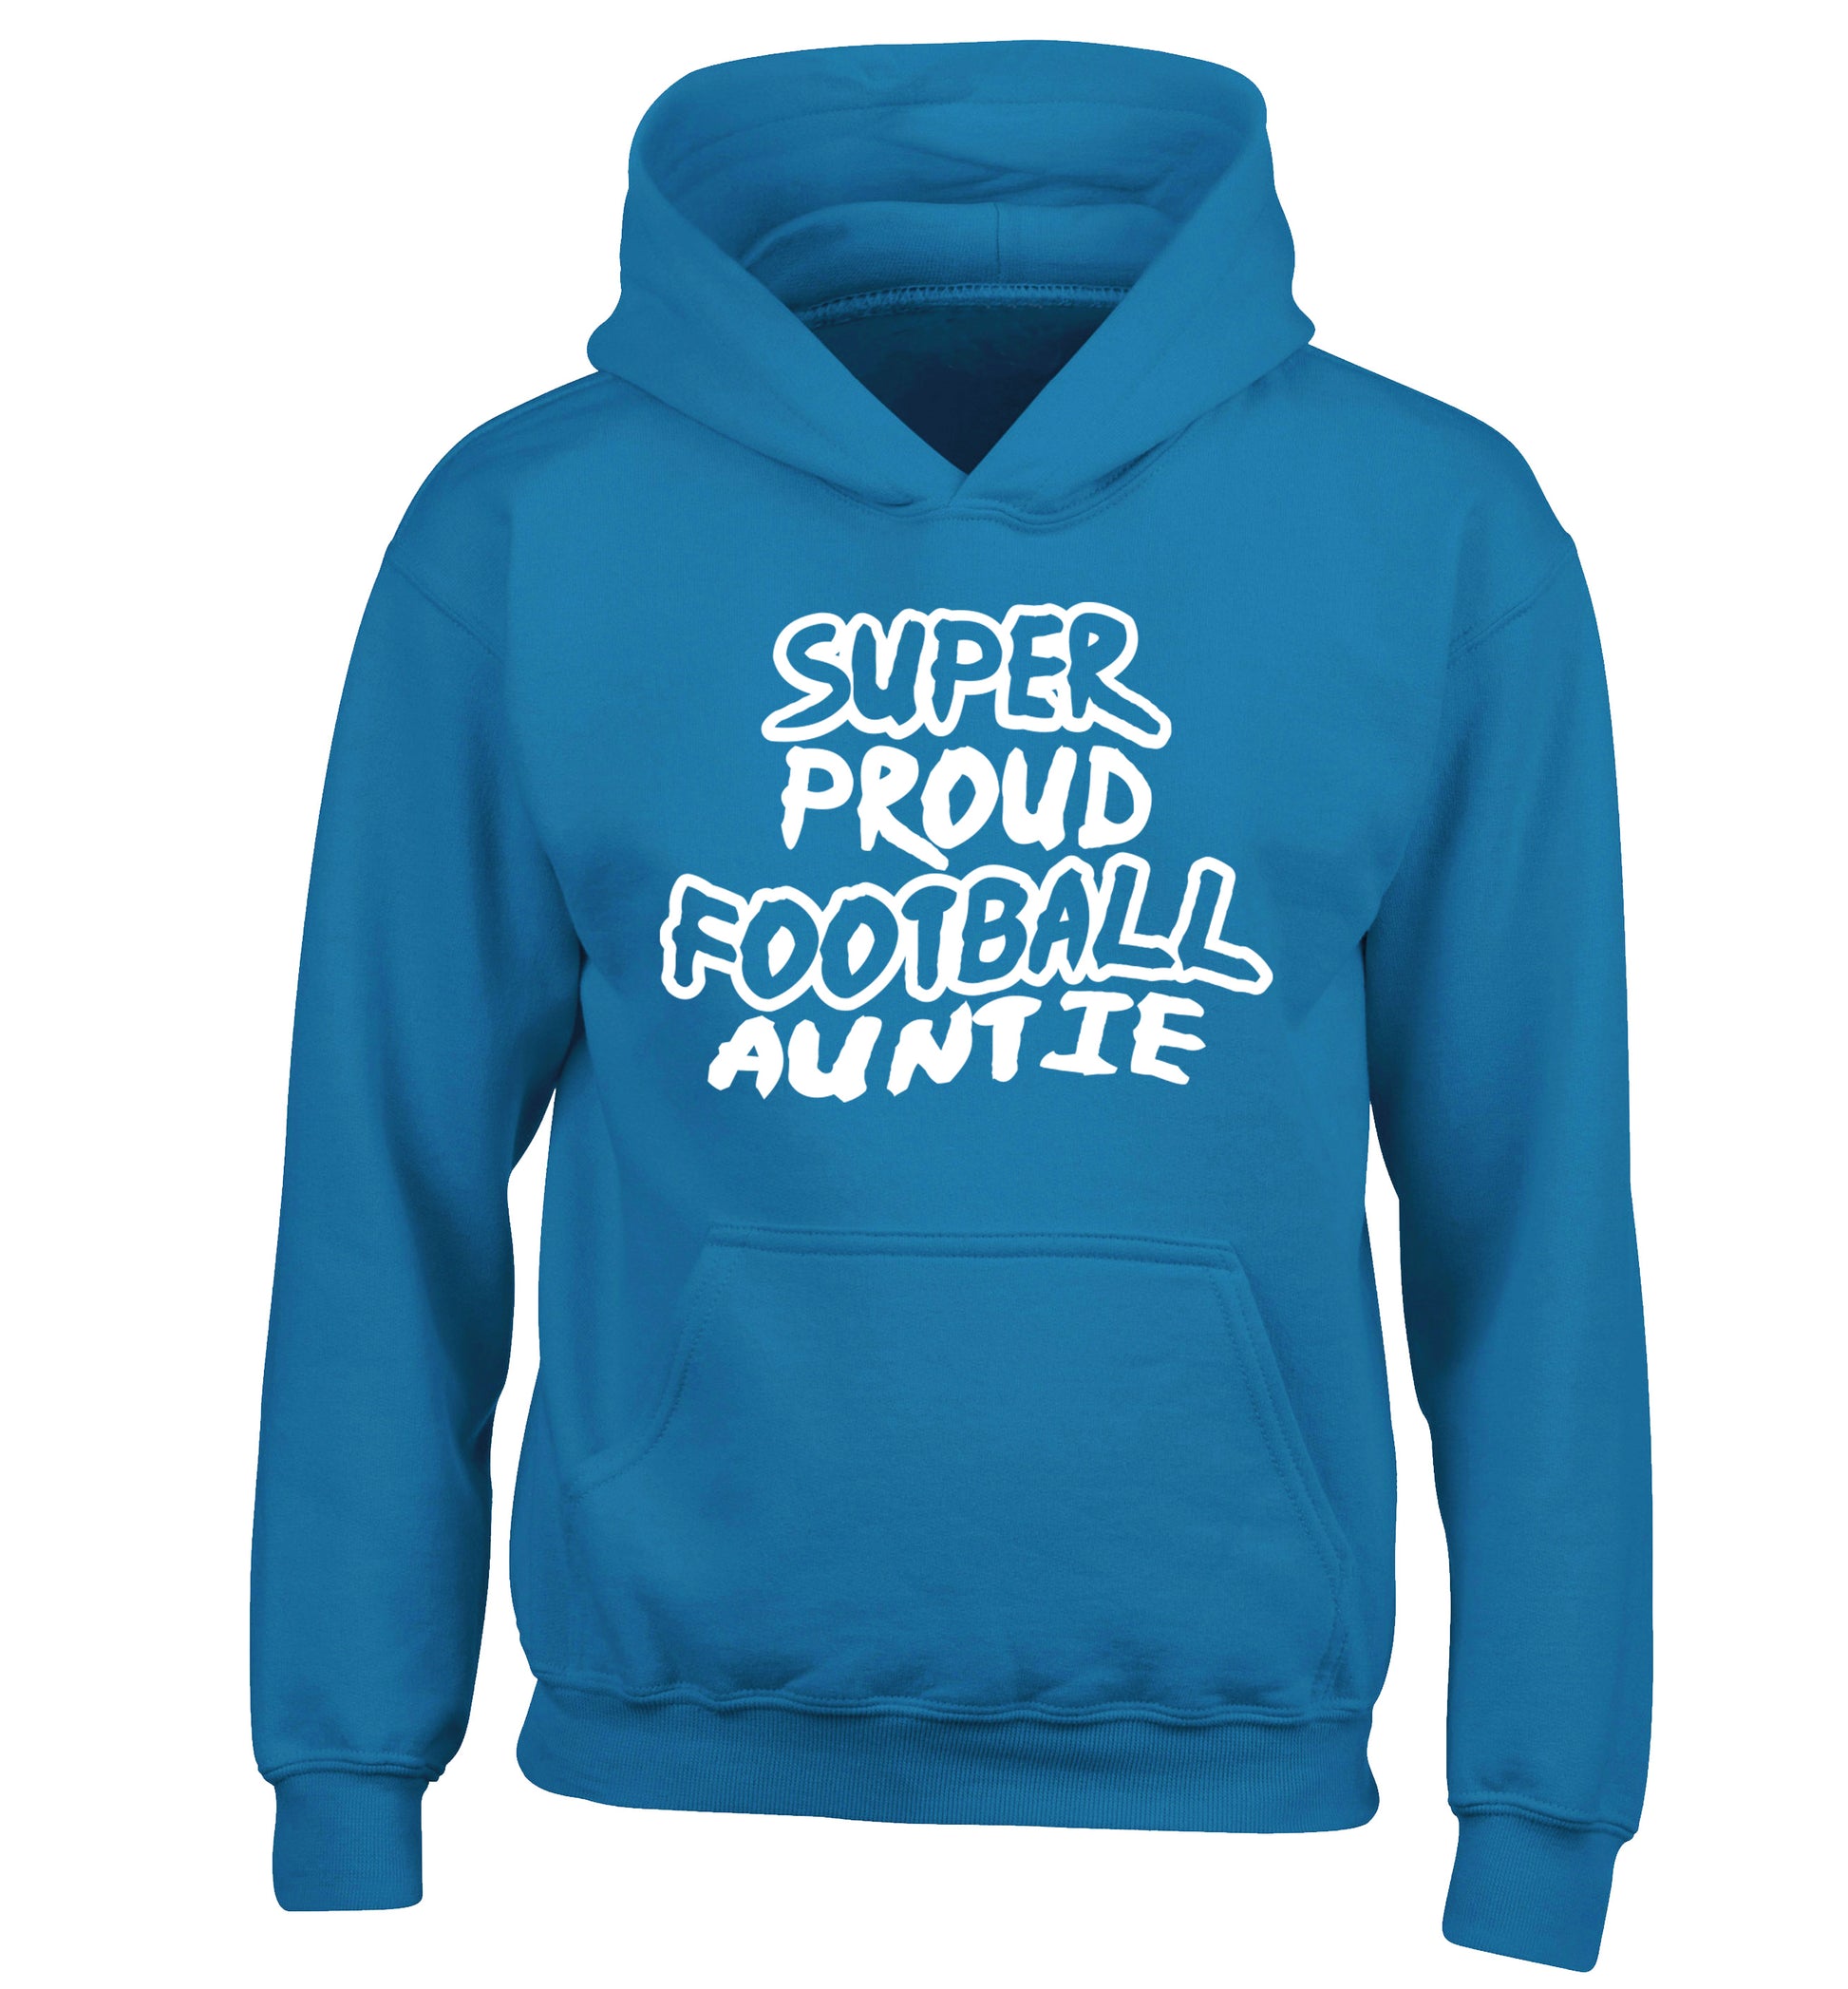 Super proud football auntie children's blue hoodie 12-14 Years